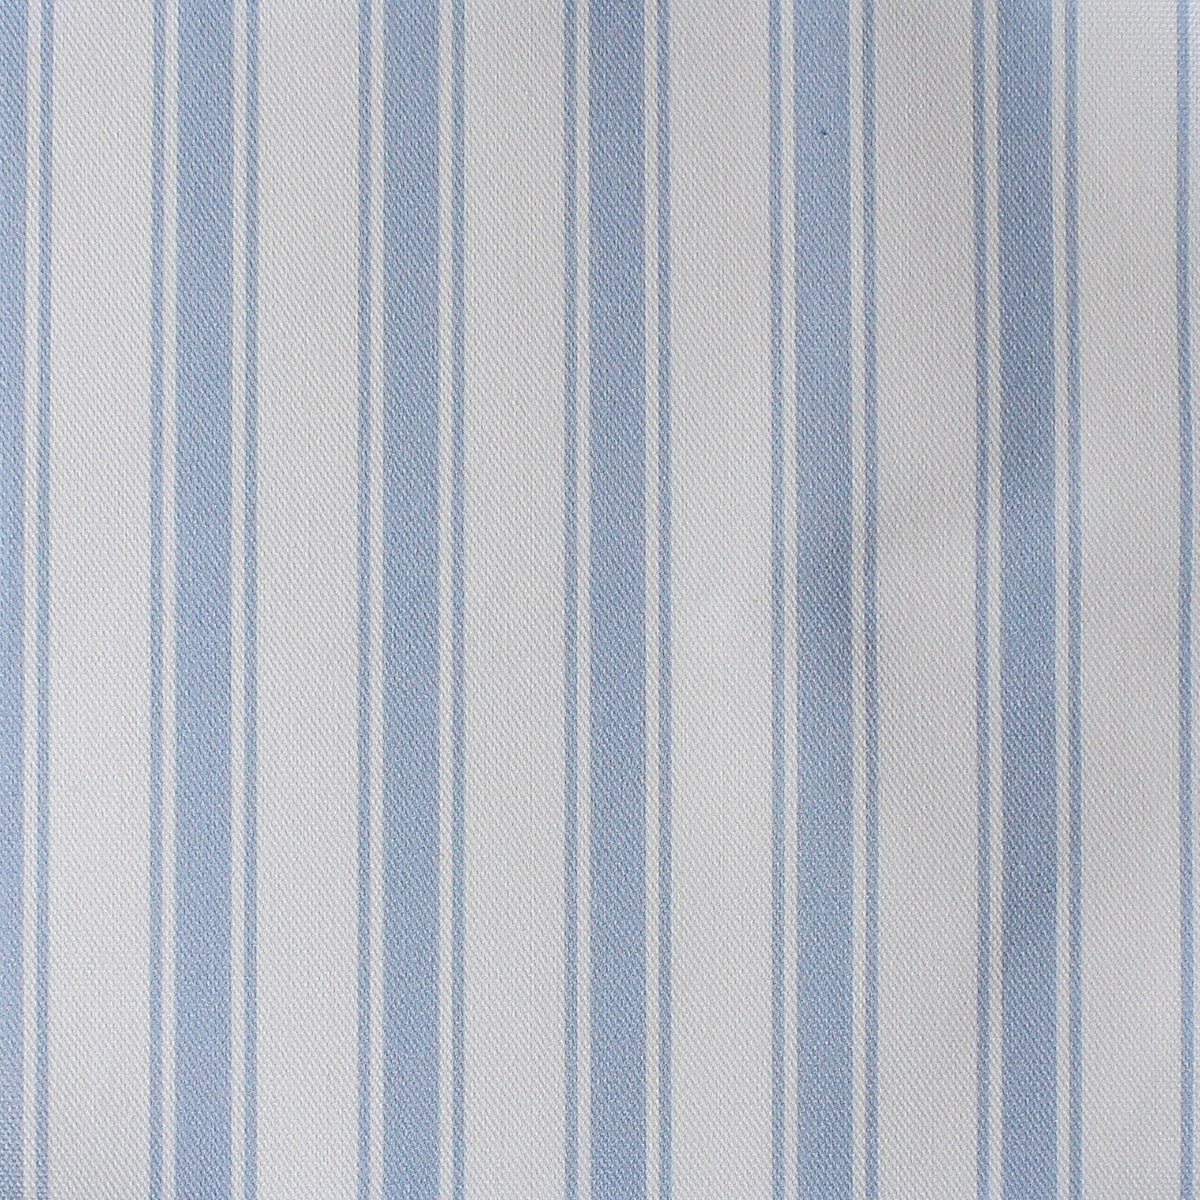 Sea stripes - white blue striped - linen fabric - 106L - LithuanianLinen